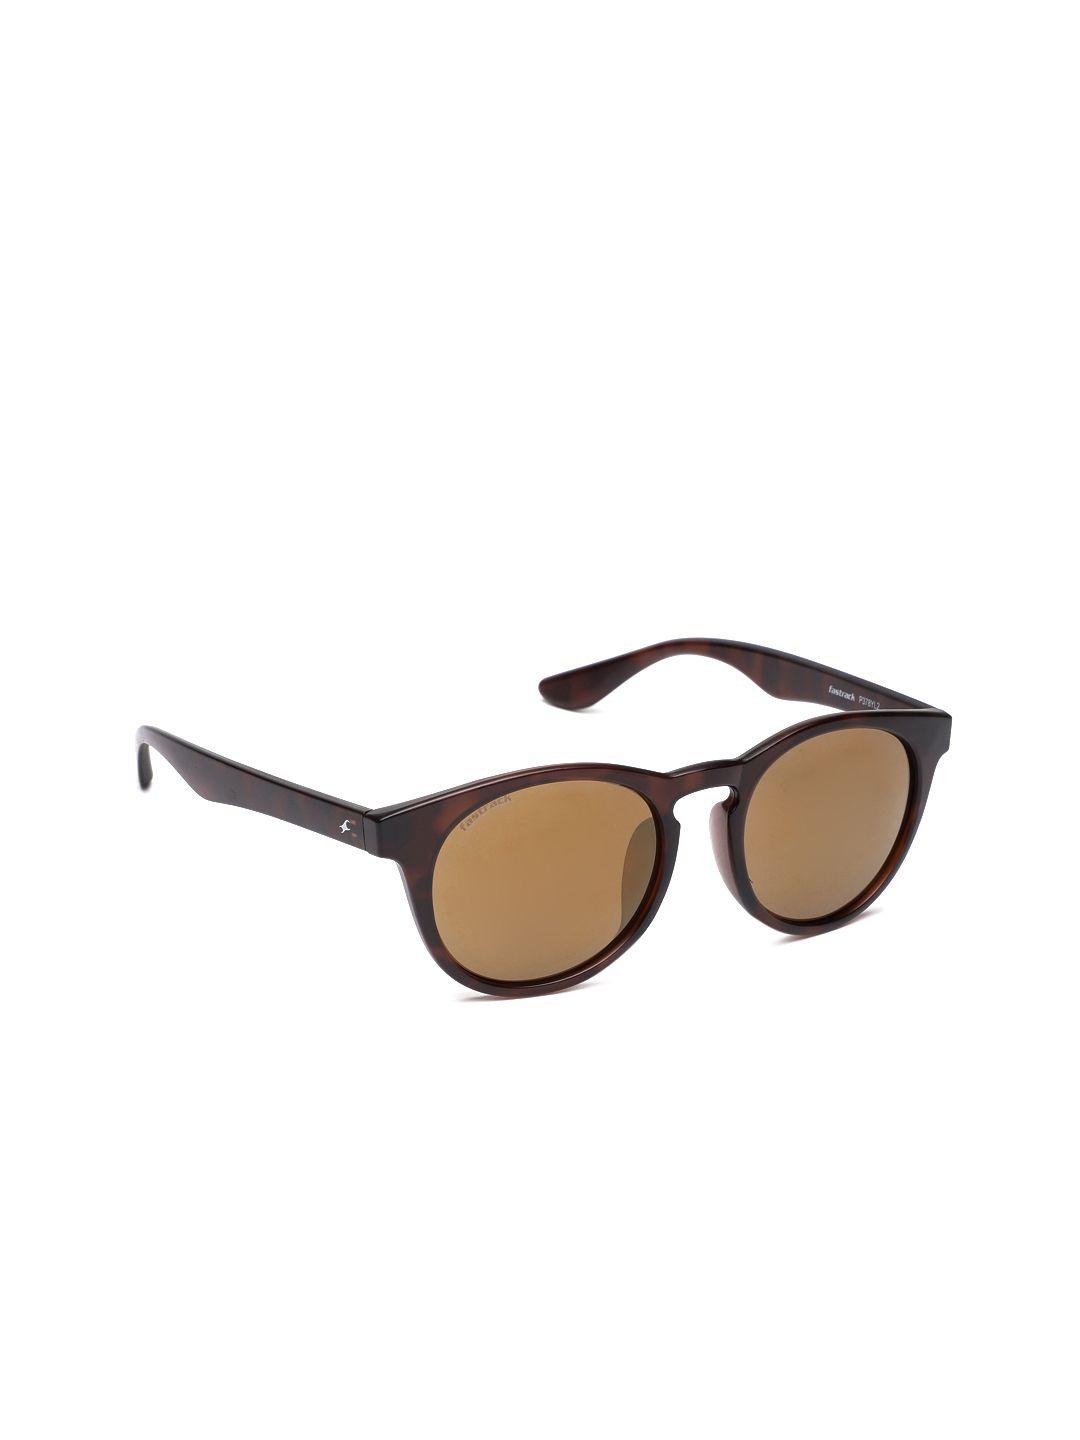 fastrack-men-oval-sunglasses-p378yl2